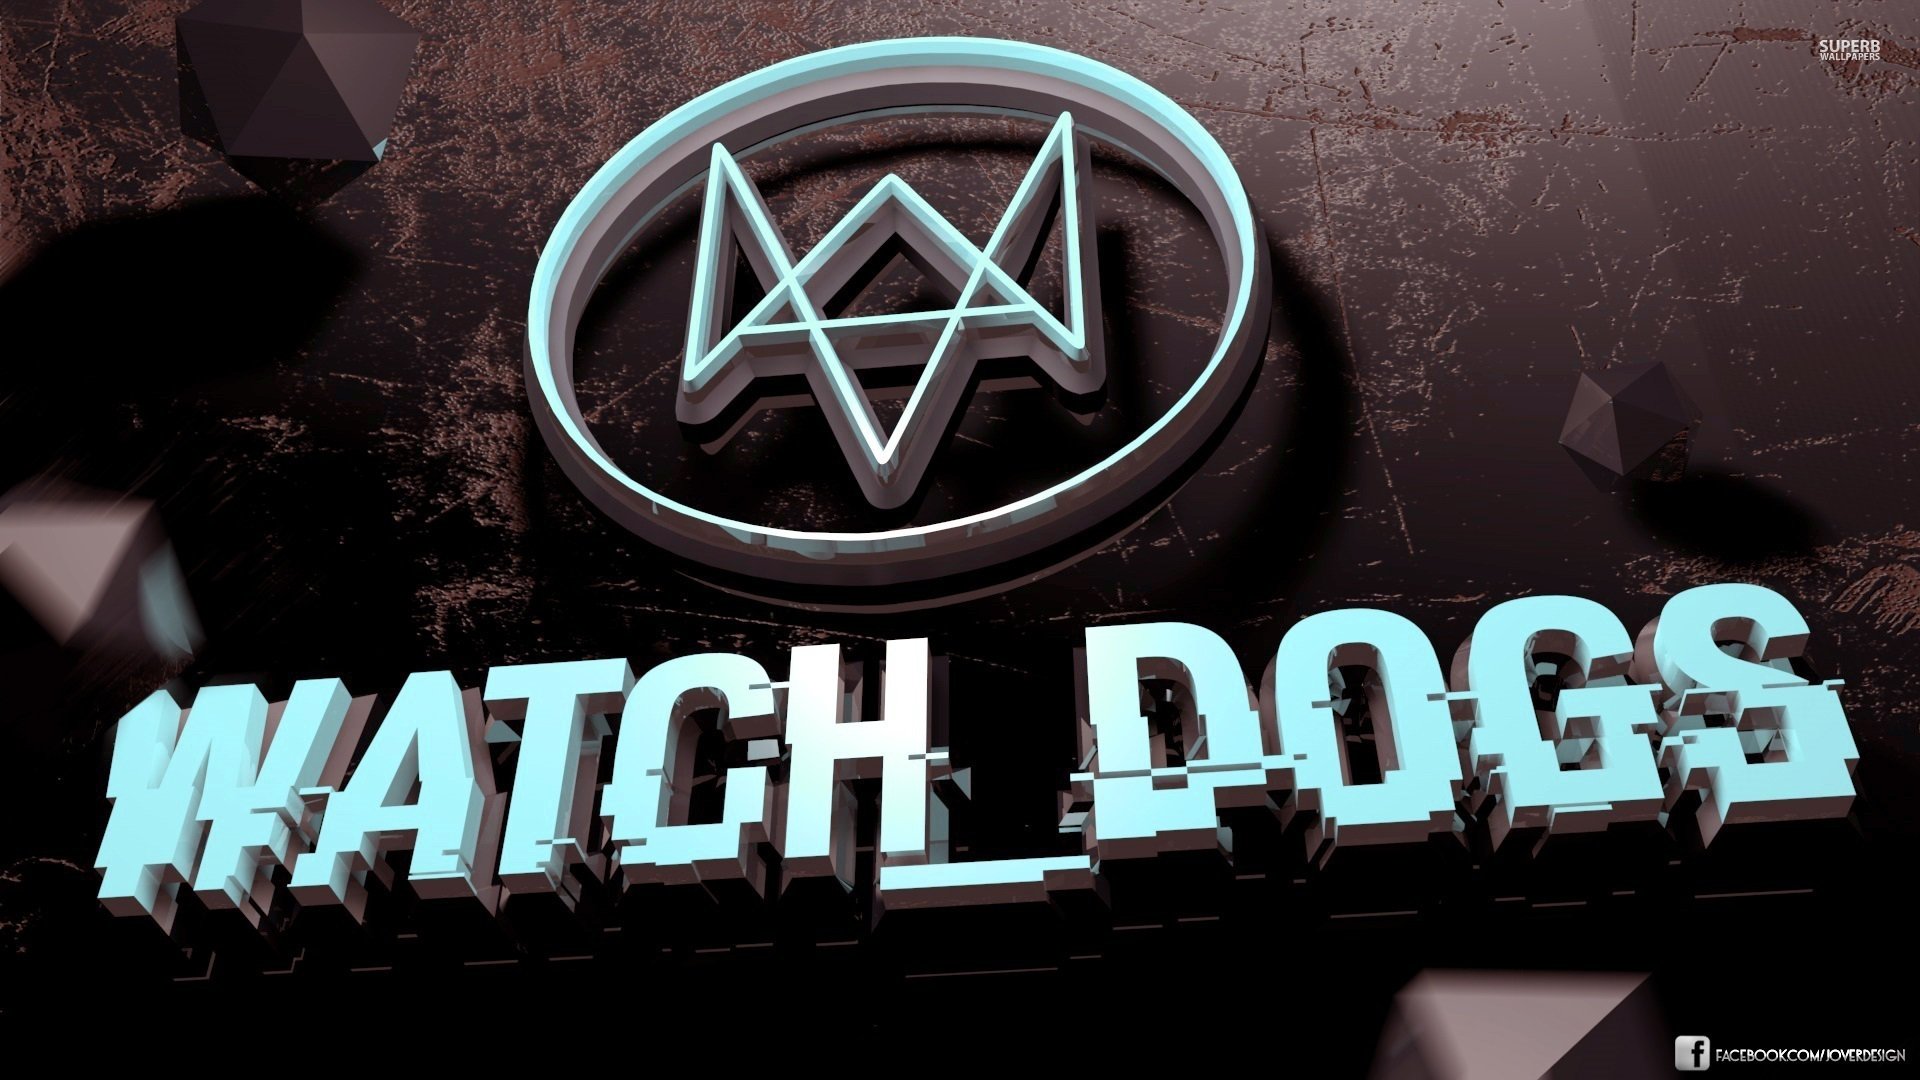 Wallpaper 1080p Watch Dogs